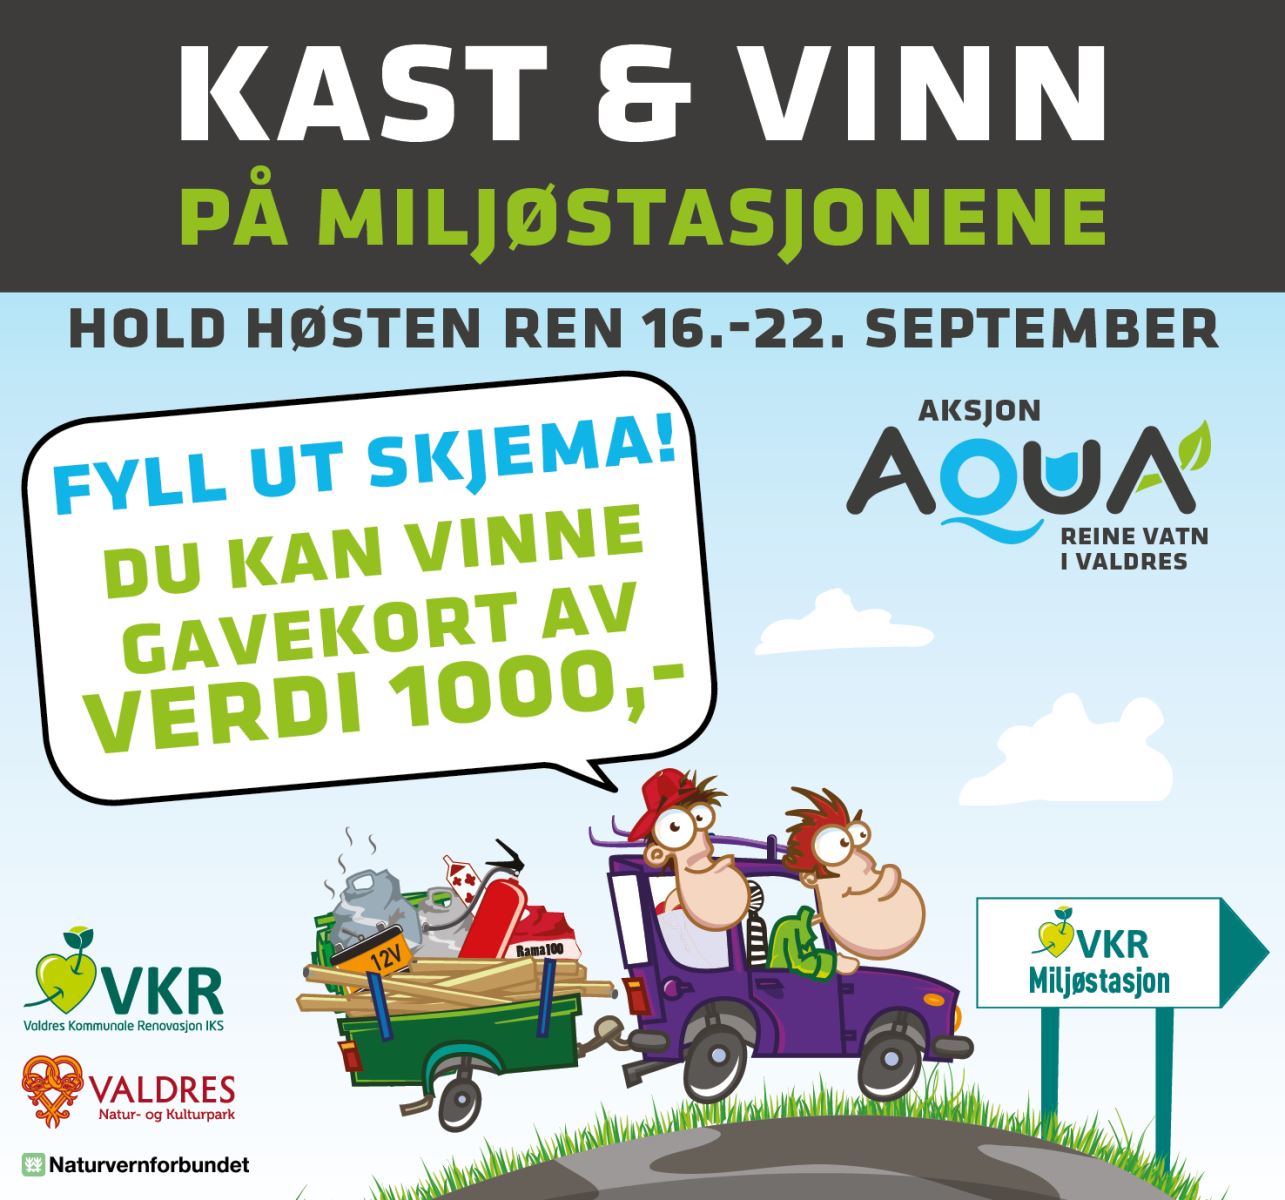 Plakat Aksjon Aqua